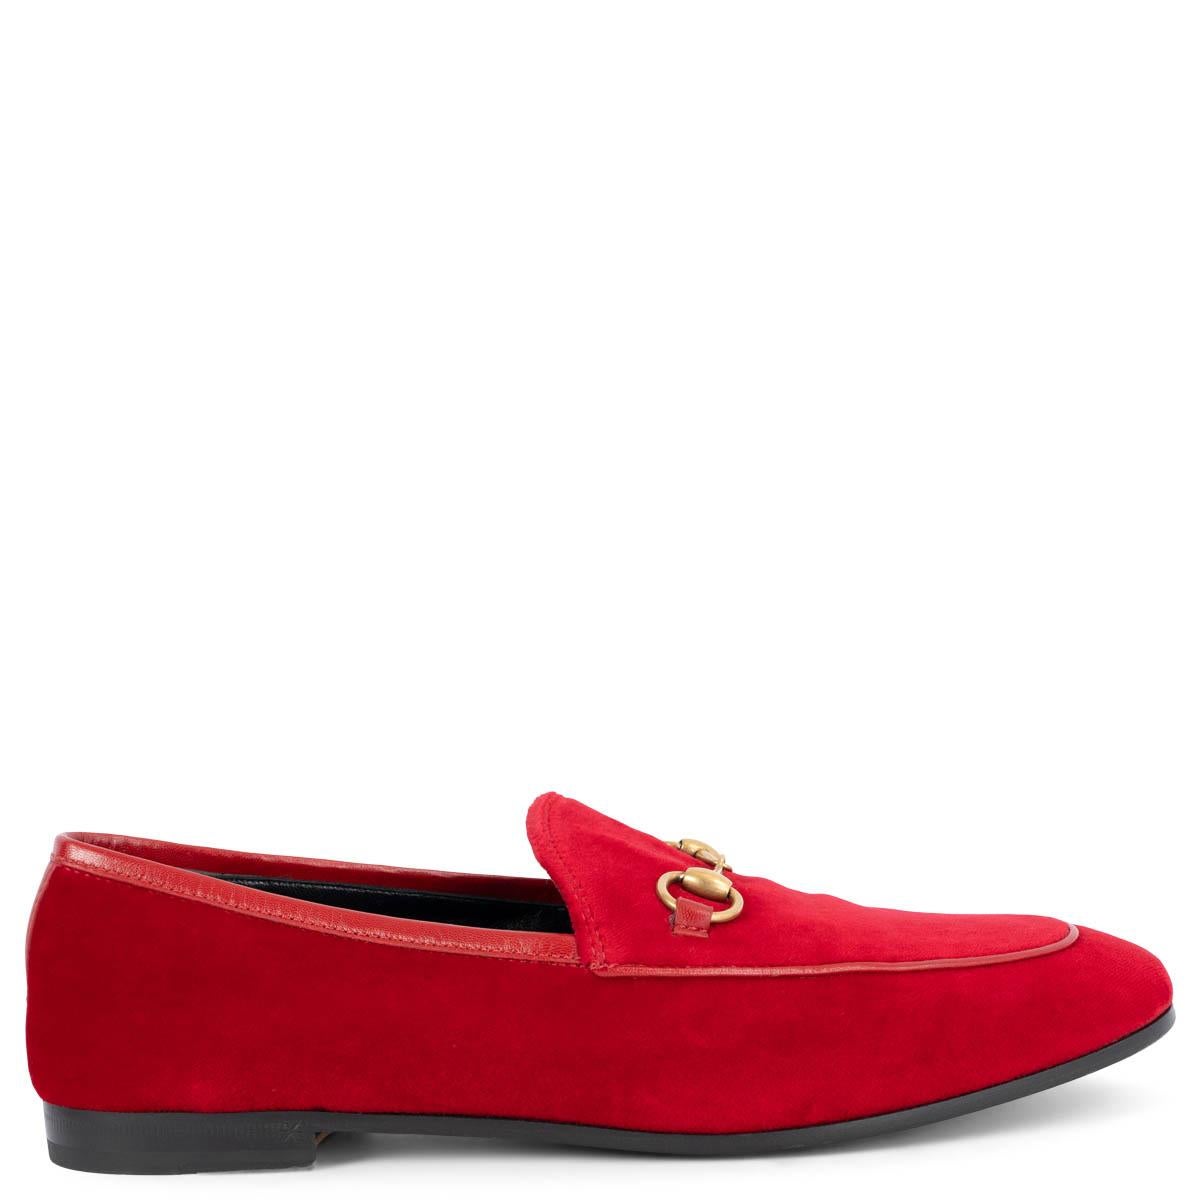 GUCCI red velvet JORDANN HORSEBIT Loafers Flats Shoes 38